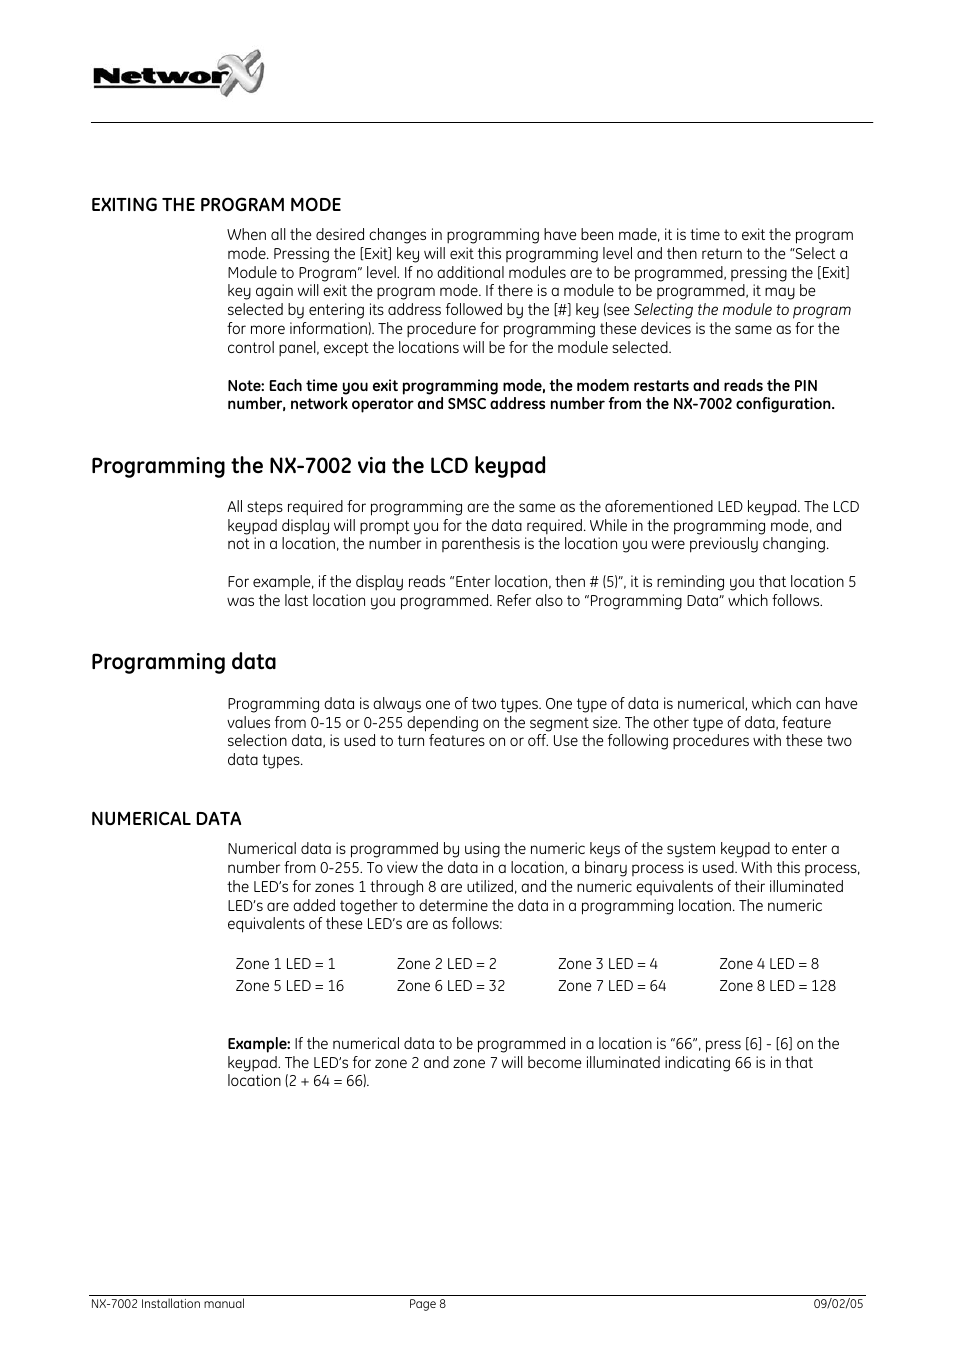 Exiting the program mode, Programming the nx-7002 via the lcd keypad, Programming data | Numerical data, Rogramming the, Nx-7002, Via the, Keypad, Rogramming data | GE NetworX NX-7002 User Manual | Page 8 / 39